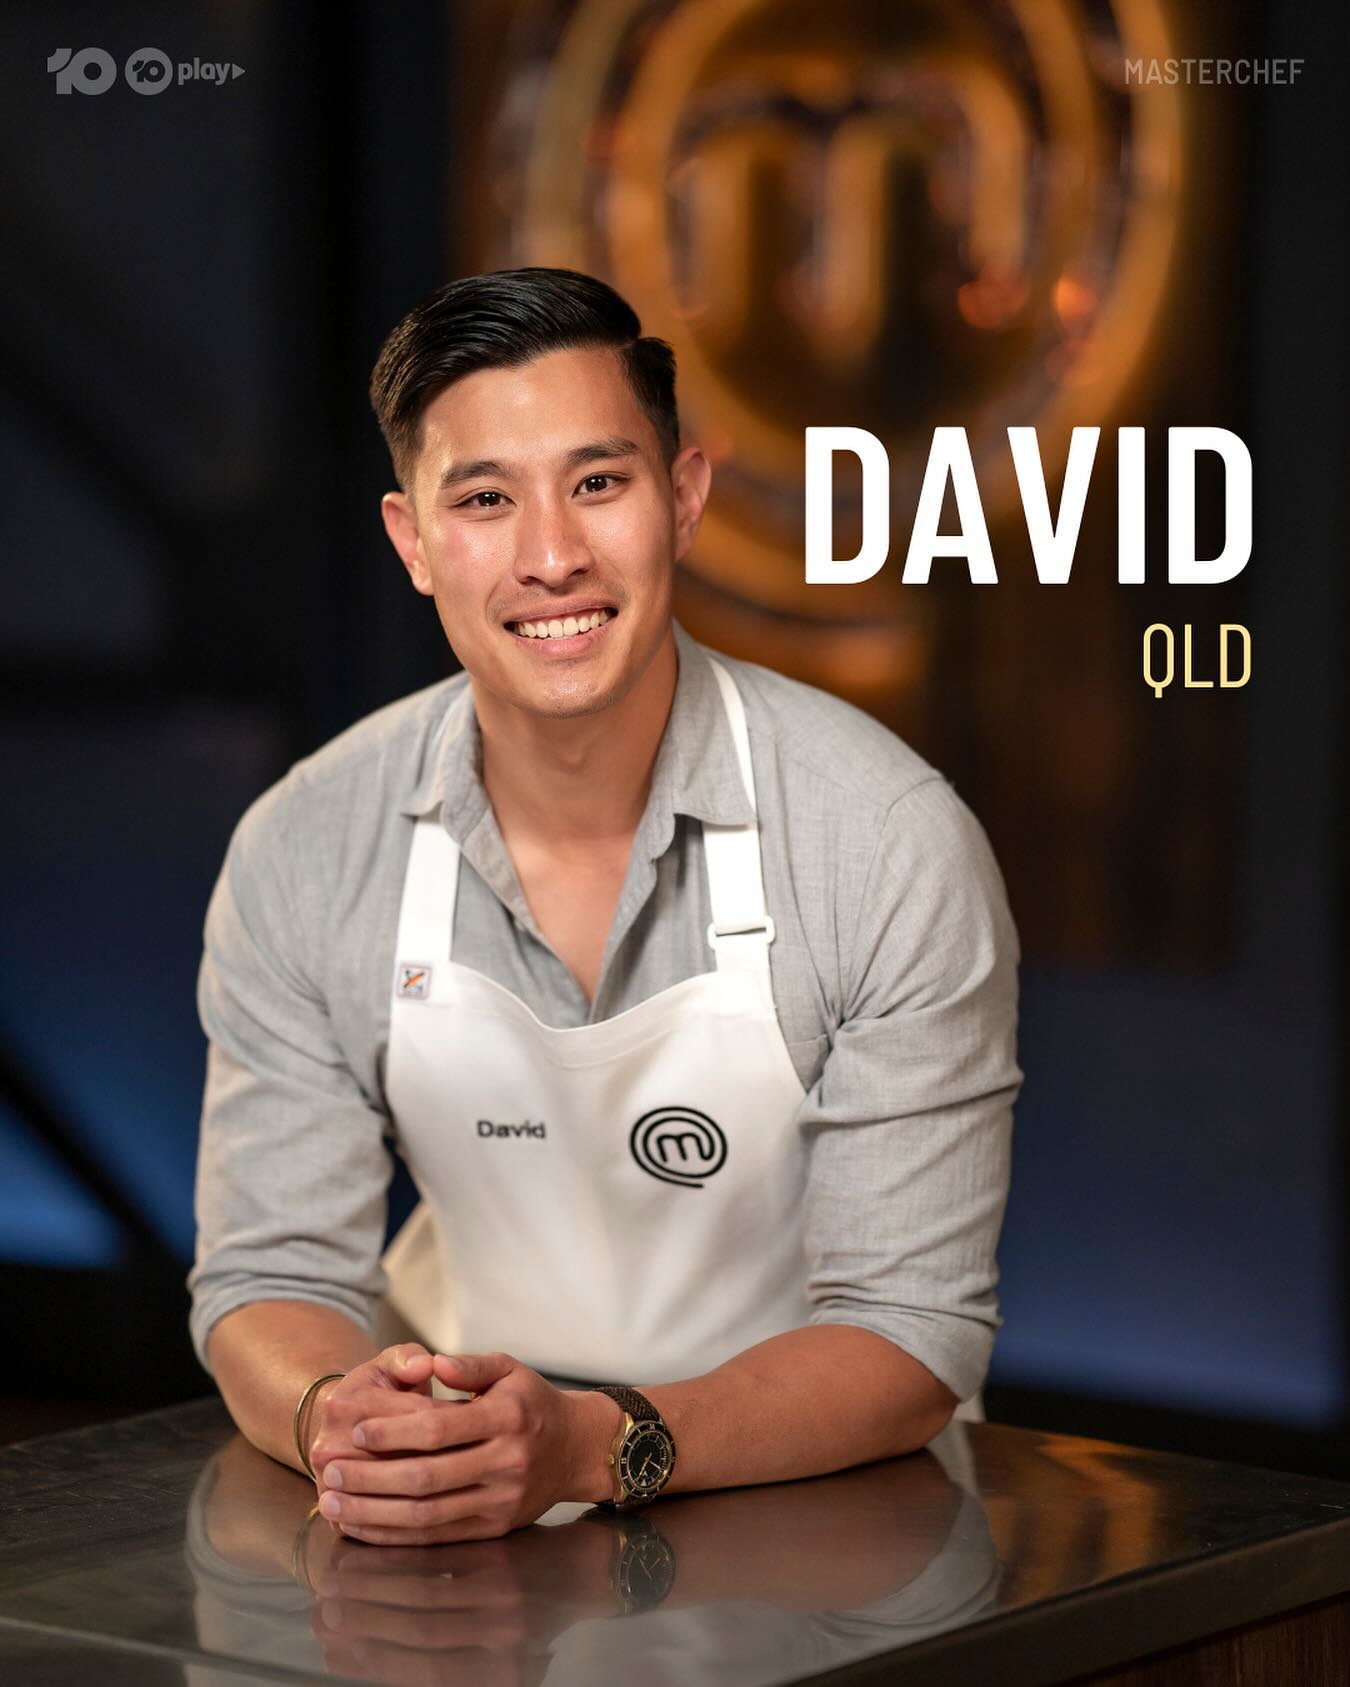 David Tan Masterchef – Age, Instagram, Background